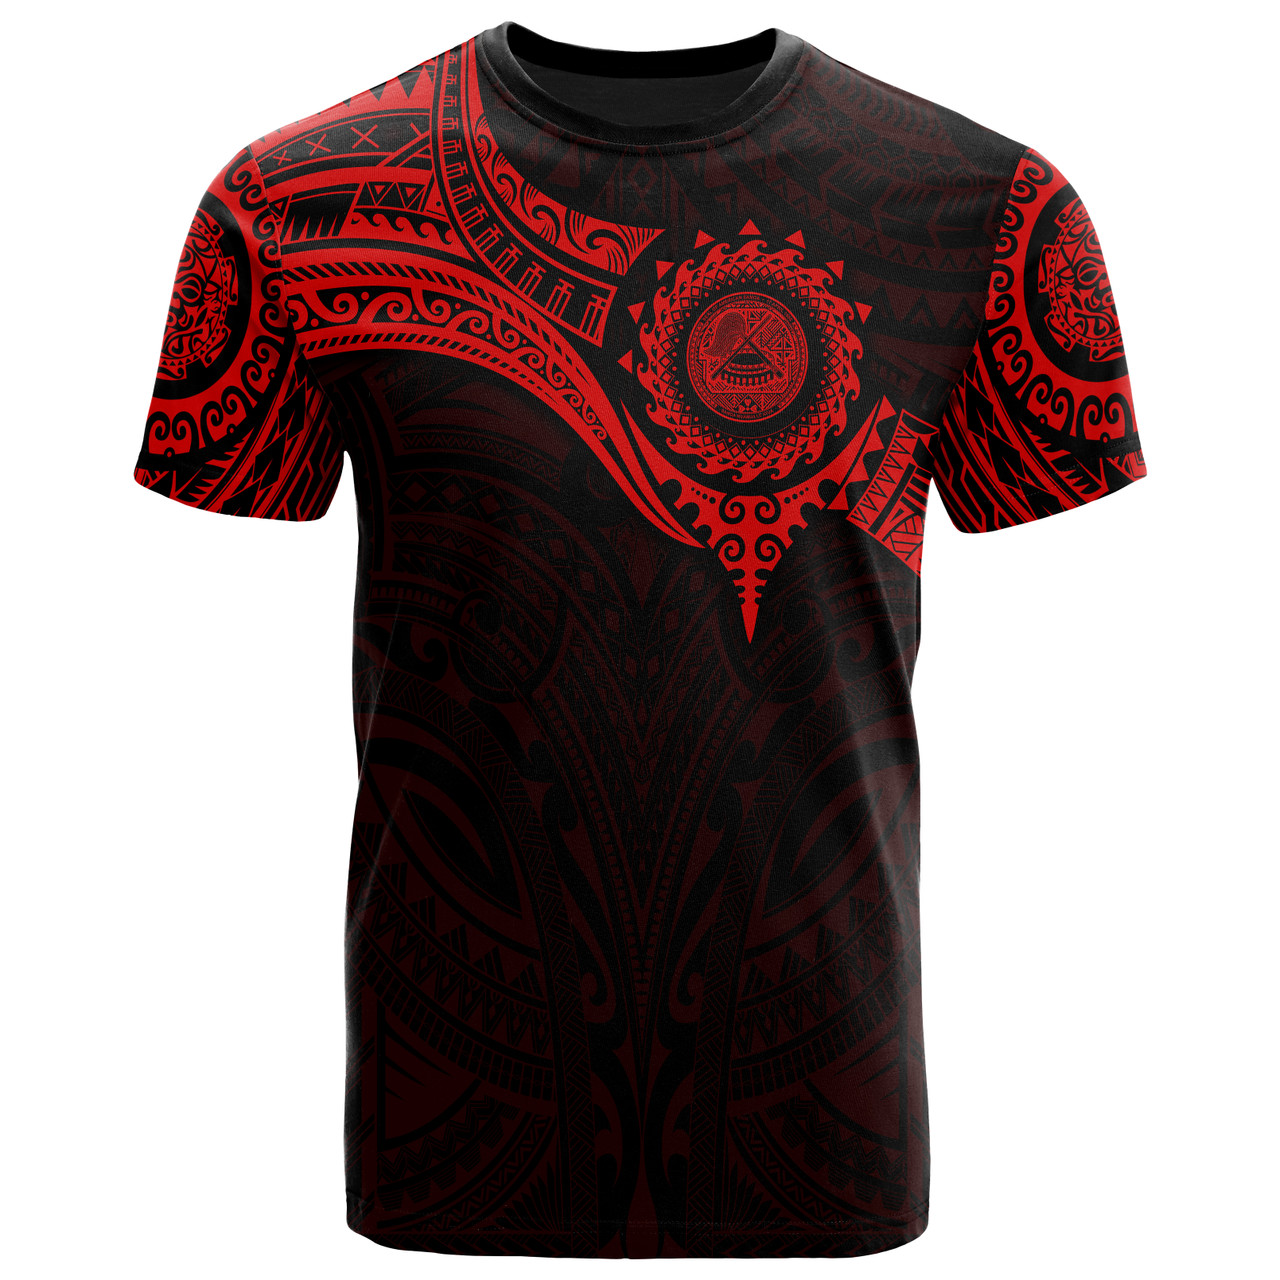 American Samoa Polynesian T-Shirt - Full Color Heart Shield 9